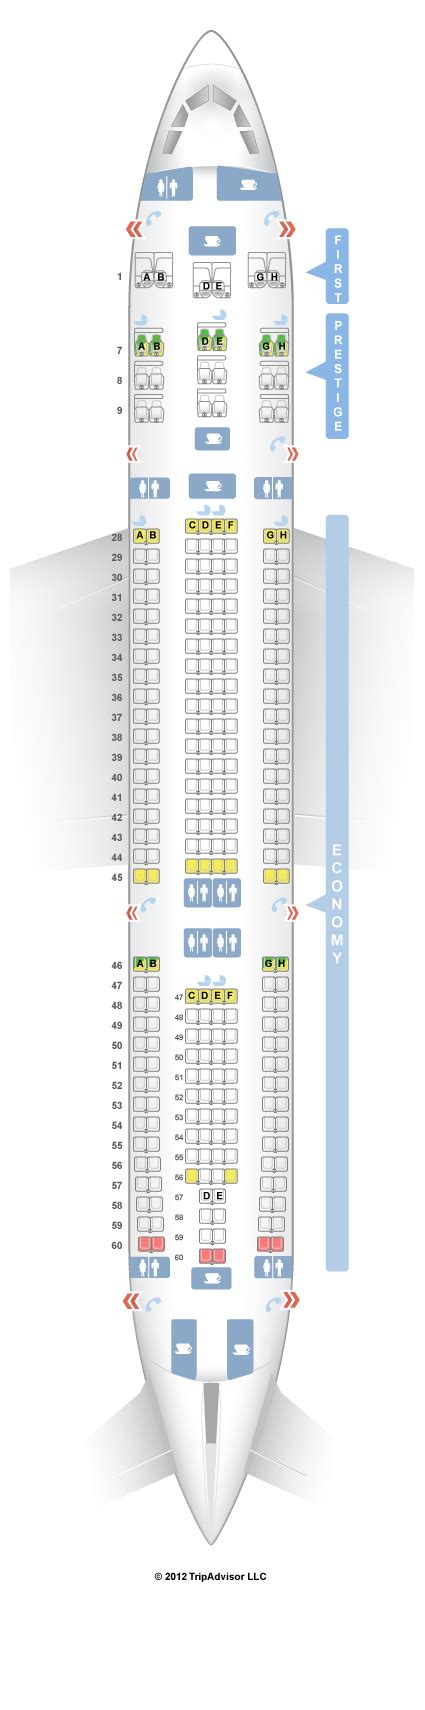 Korean Air Seating Chart Boeing 777 300er Jet